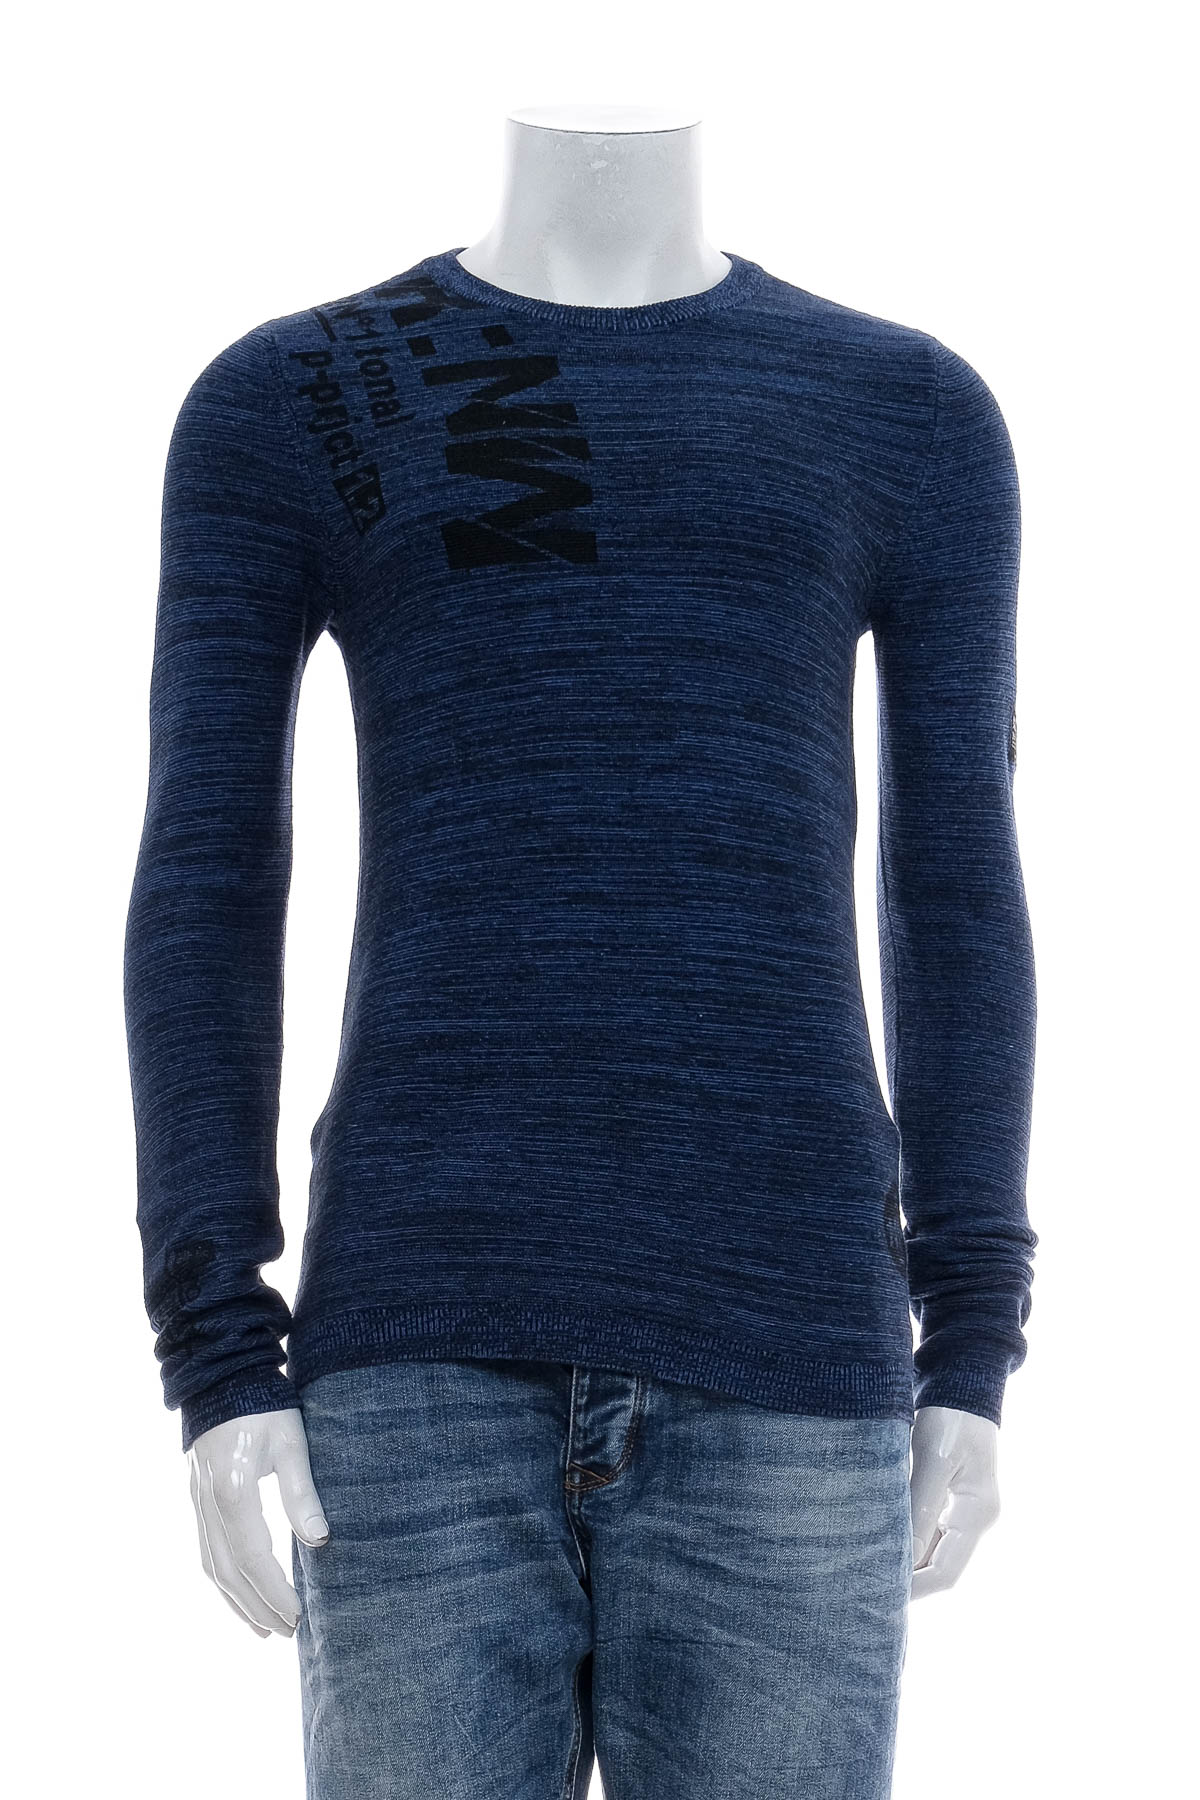 Men's sweater - Angelo Litrico - 0